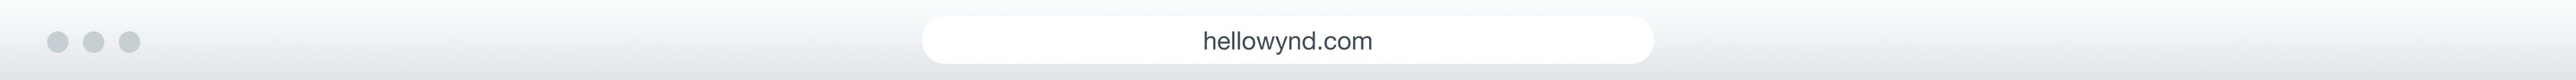 Website browser URL bar